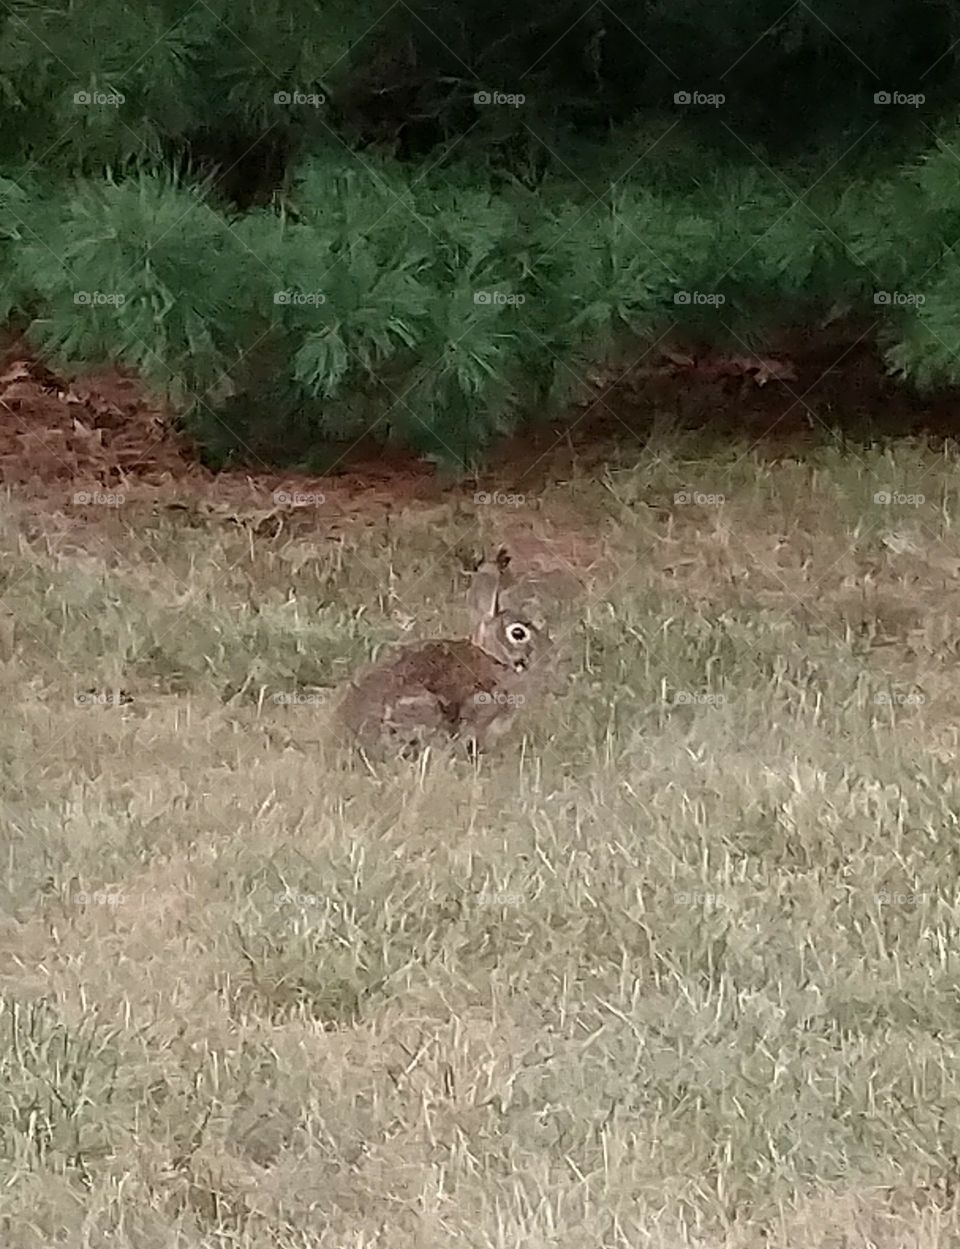 bunny rabbit in the grass